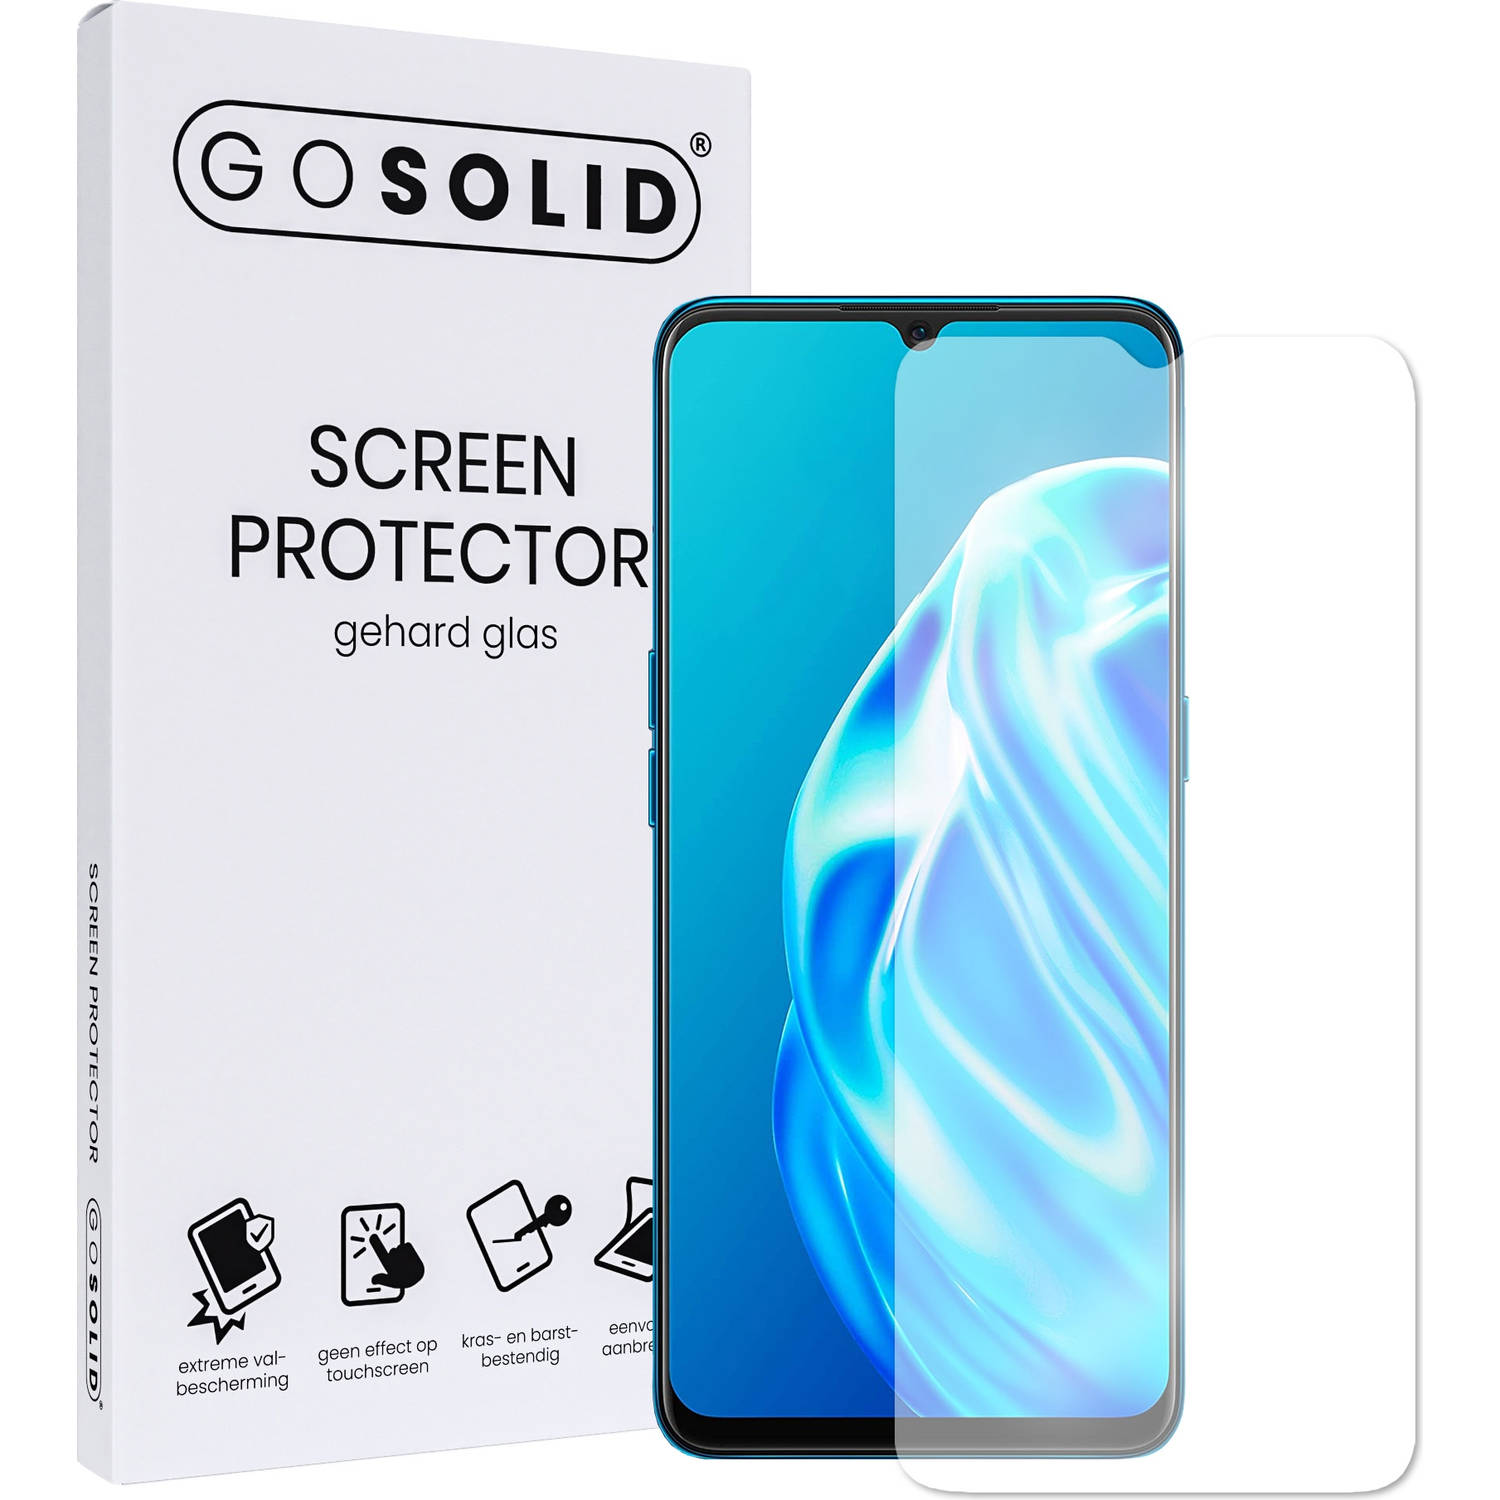 GO SOLID! Screenprotector voor Oppo A91 gehard glas